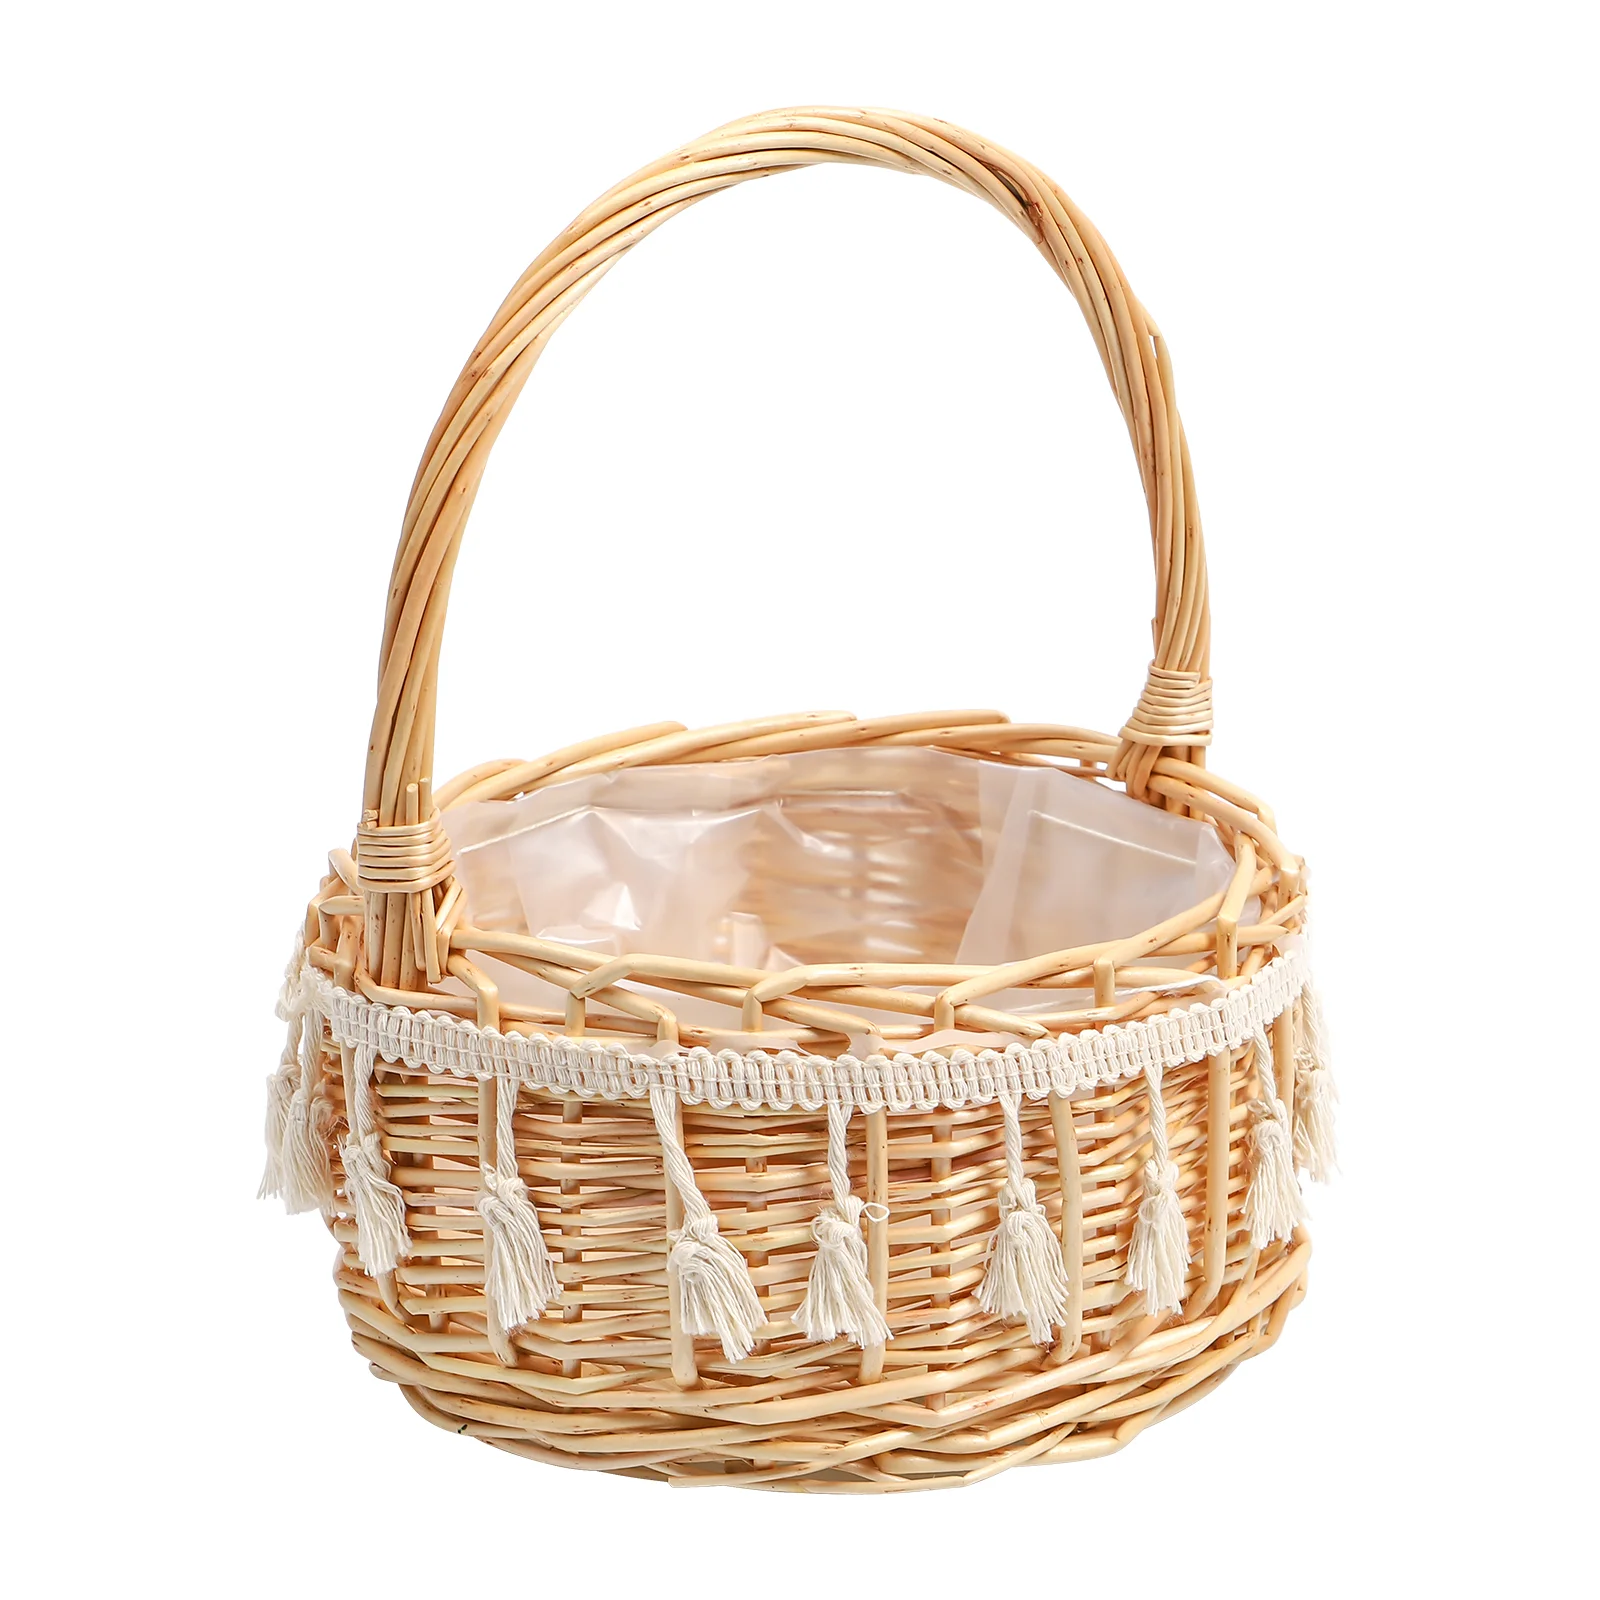 Wicker Gift Basket Flowers Handheld Decorative Women Gifts Baskets Willow